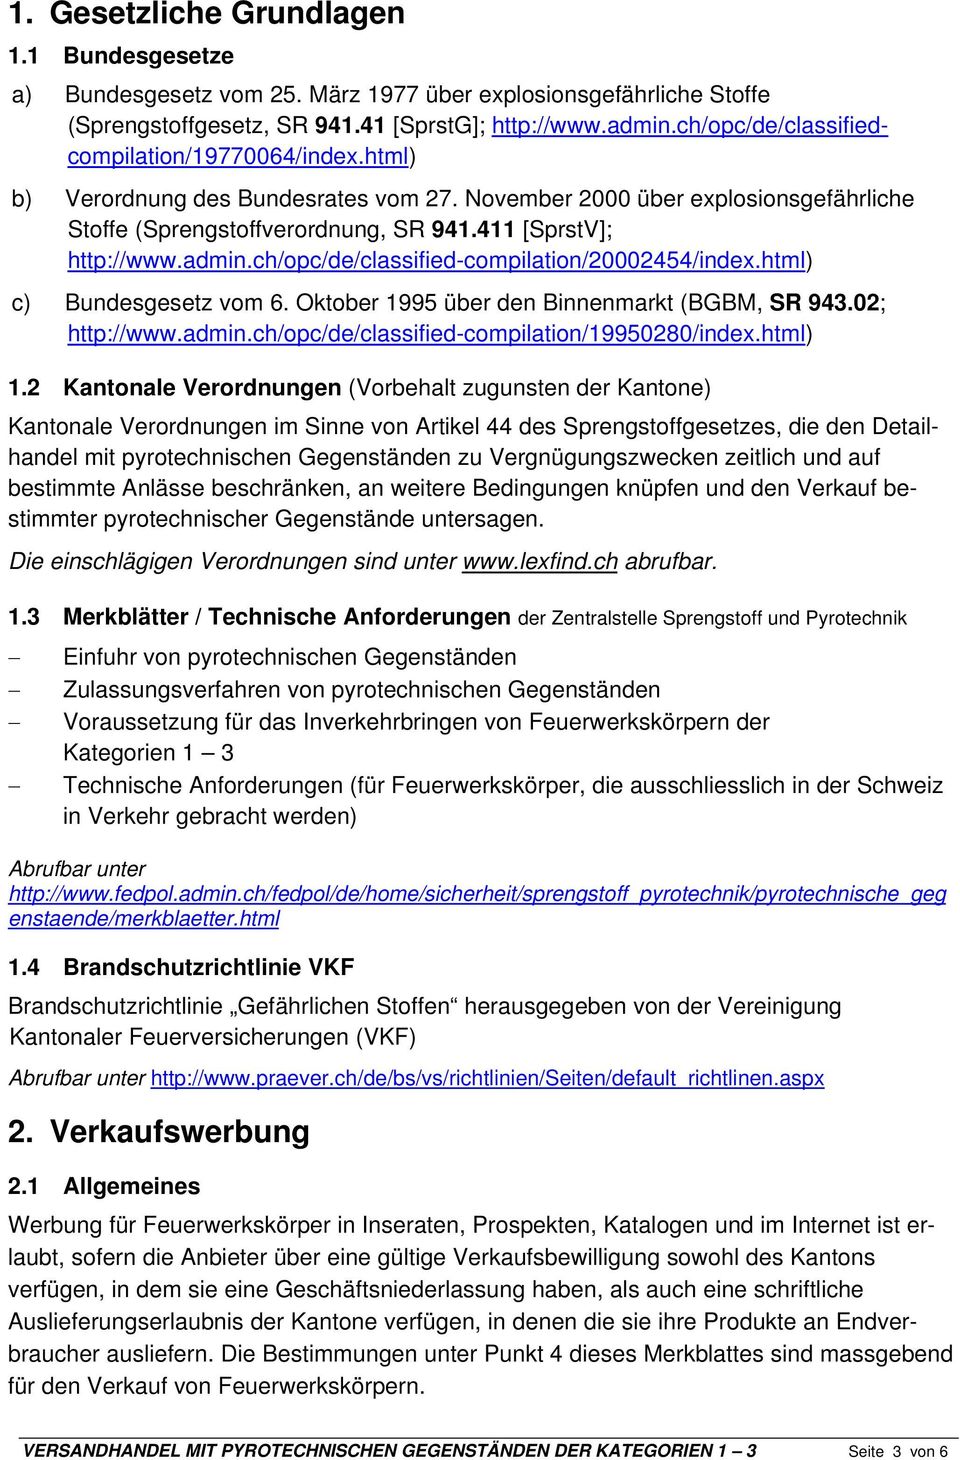 admin.ch/opc/de/classified-compilation/20002454/index.html) c) Bundesgesetz vom 6. Oktober 1995 über den Binnenmarkt (BGBM, SR 943.02; http://www.admin.ch/opc/de/classified-compilation/19950280/index.